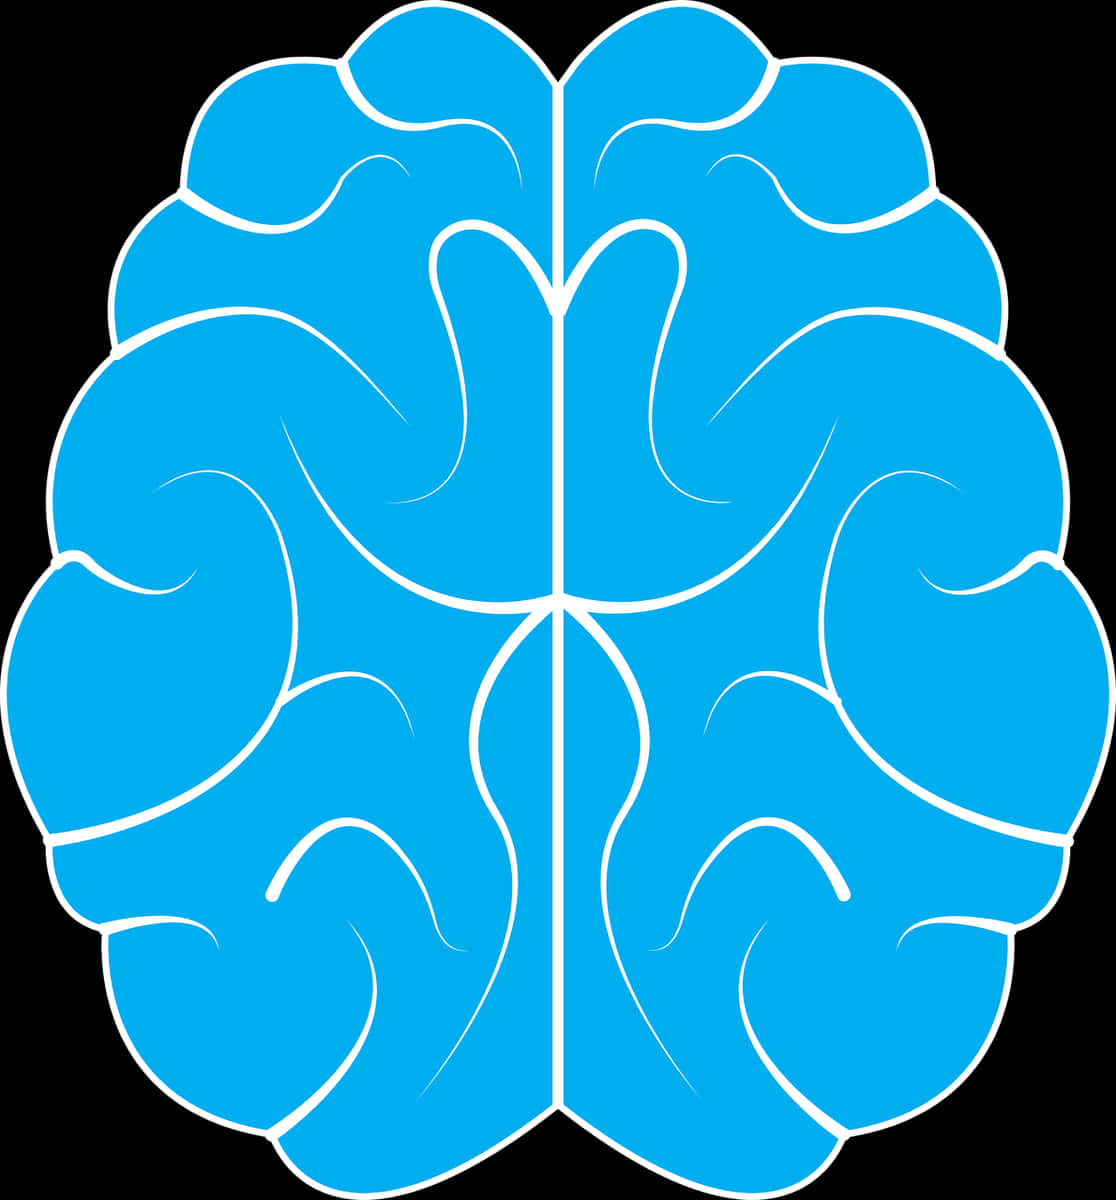 Stylized Blue Brain Illustration